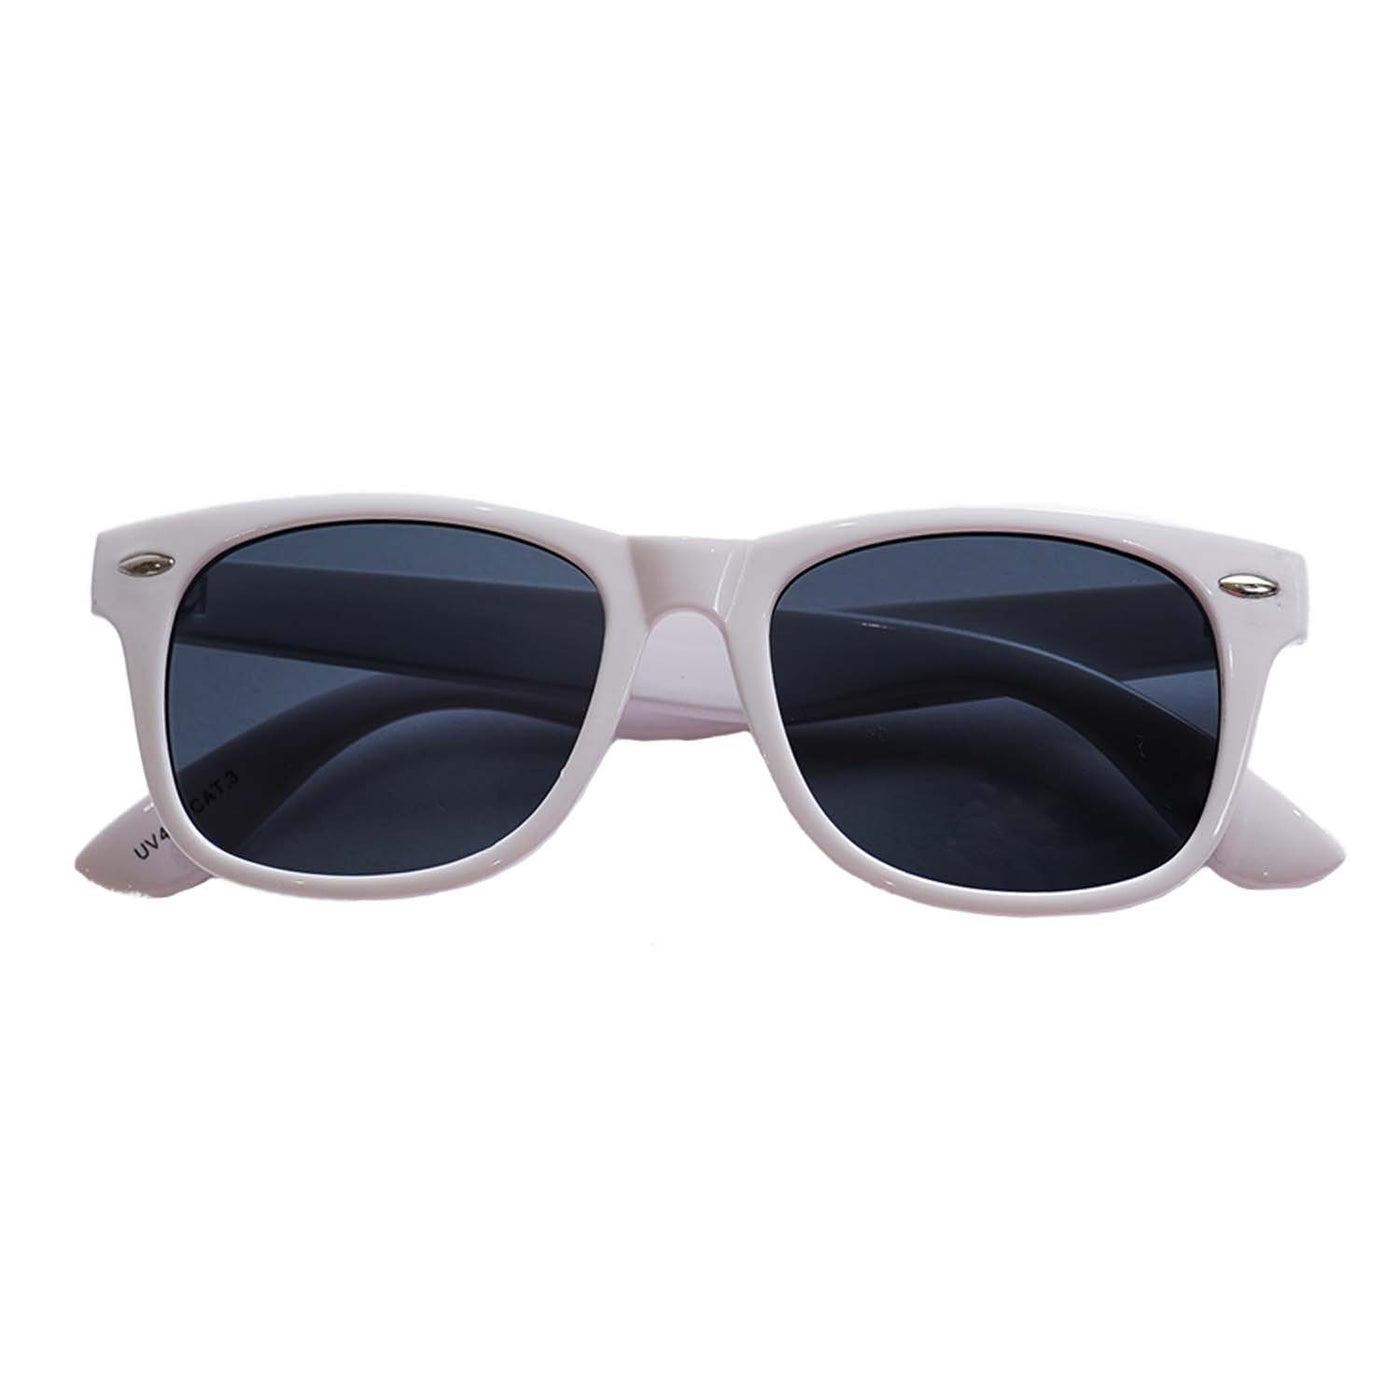 white classic sunglasses for kids 